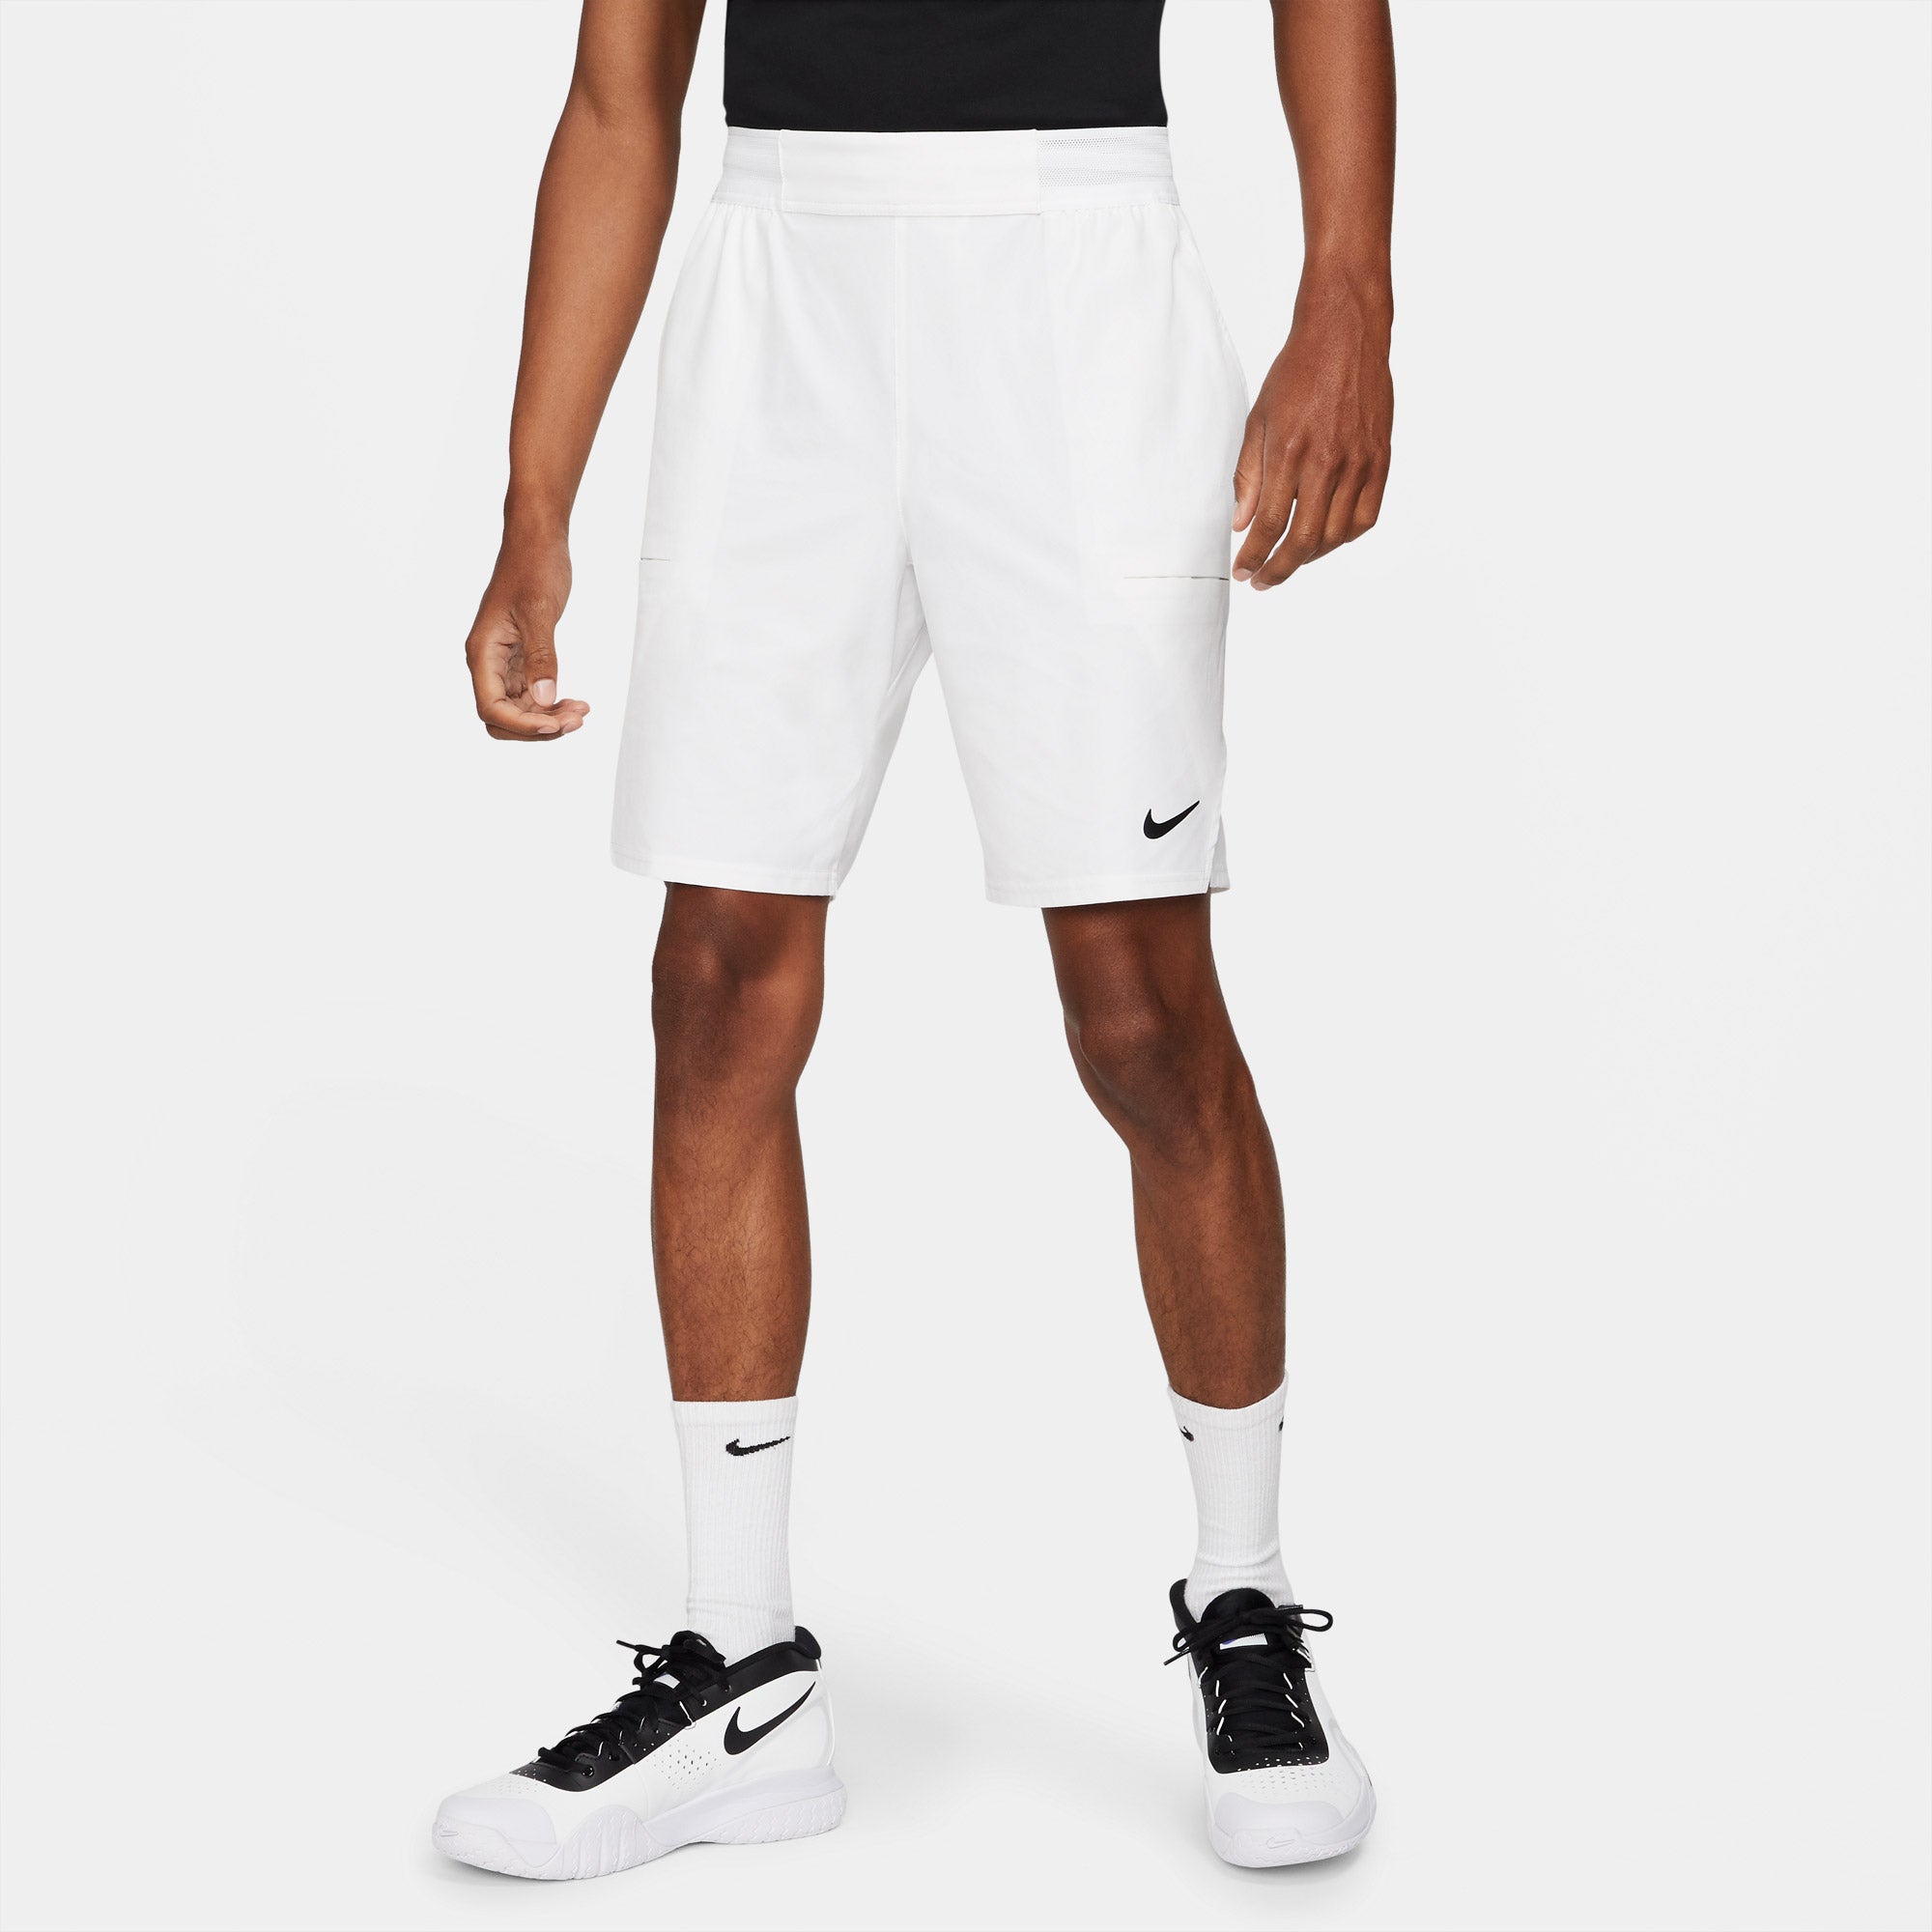 Nike Flex Advantage Men's 9-Inch Tennis Shorts White (1)